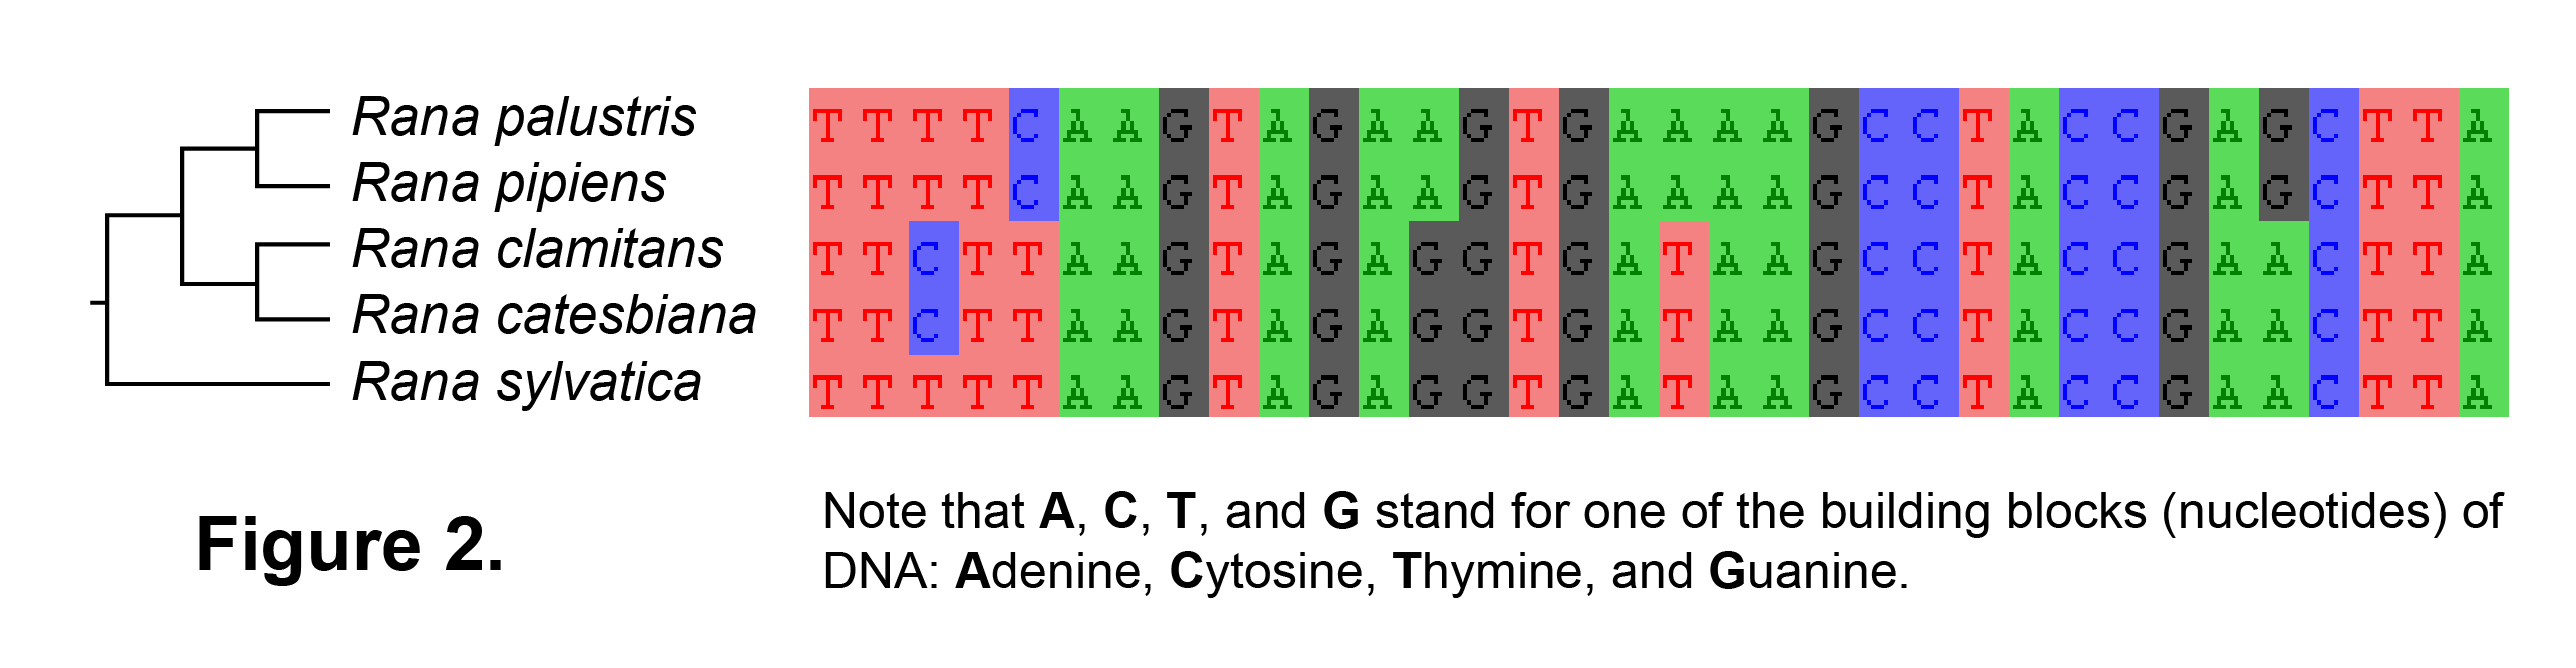 Figure 2: Aligning sequences